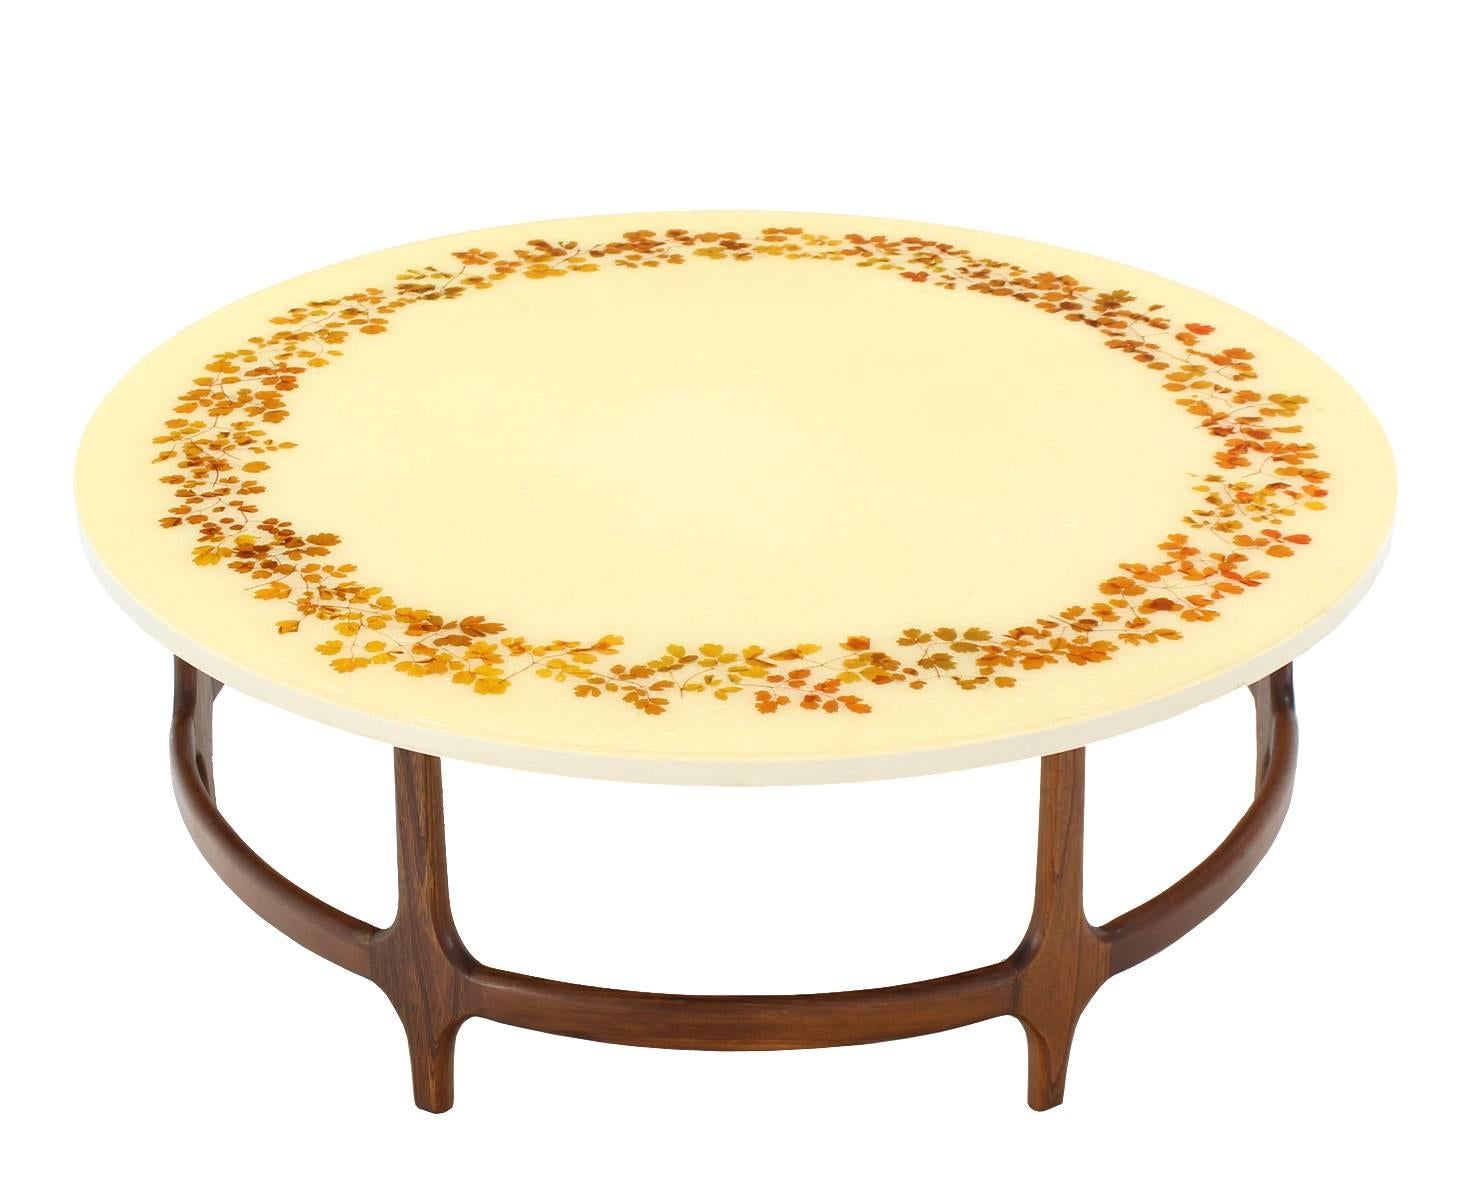 Very nice Mid-Century Modern decorative top round coffee table.